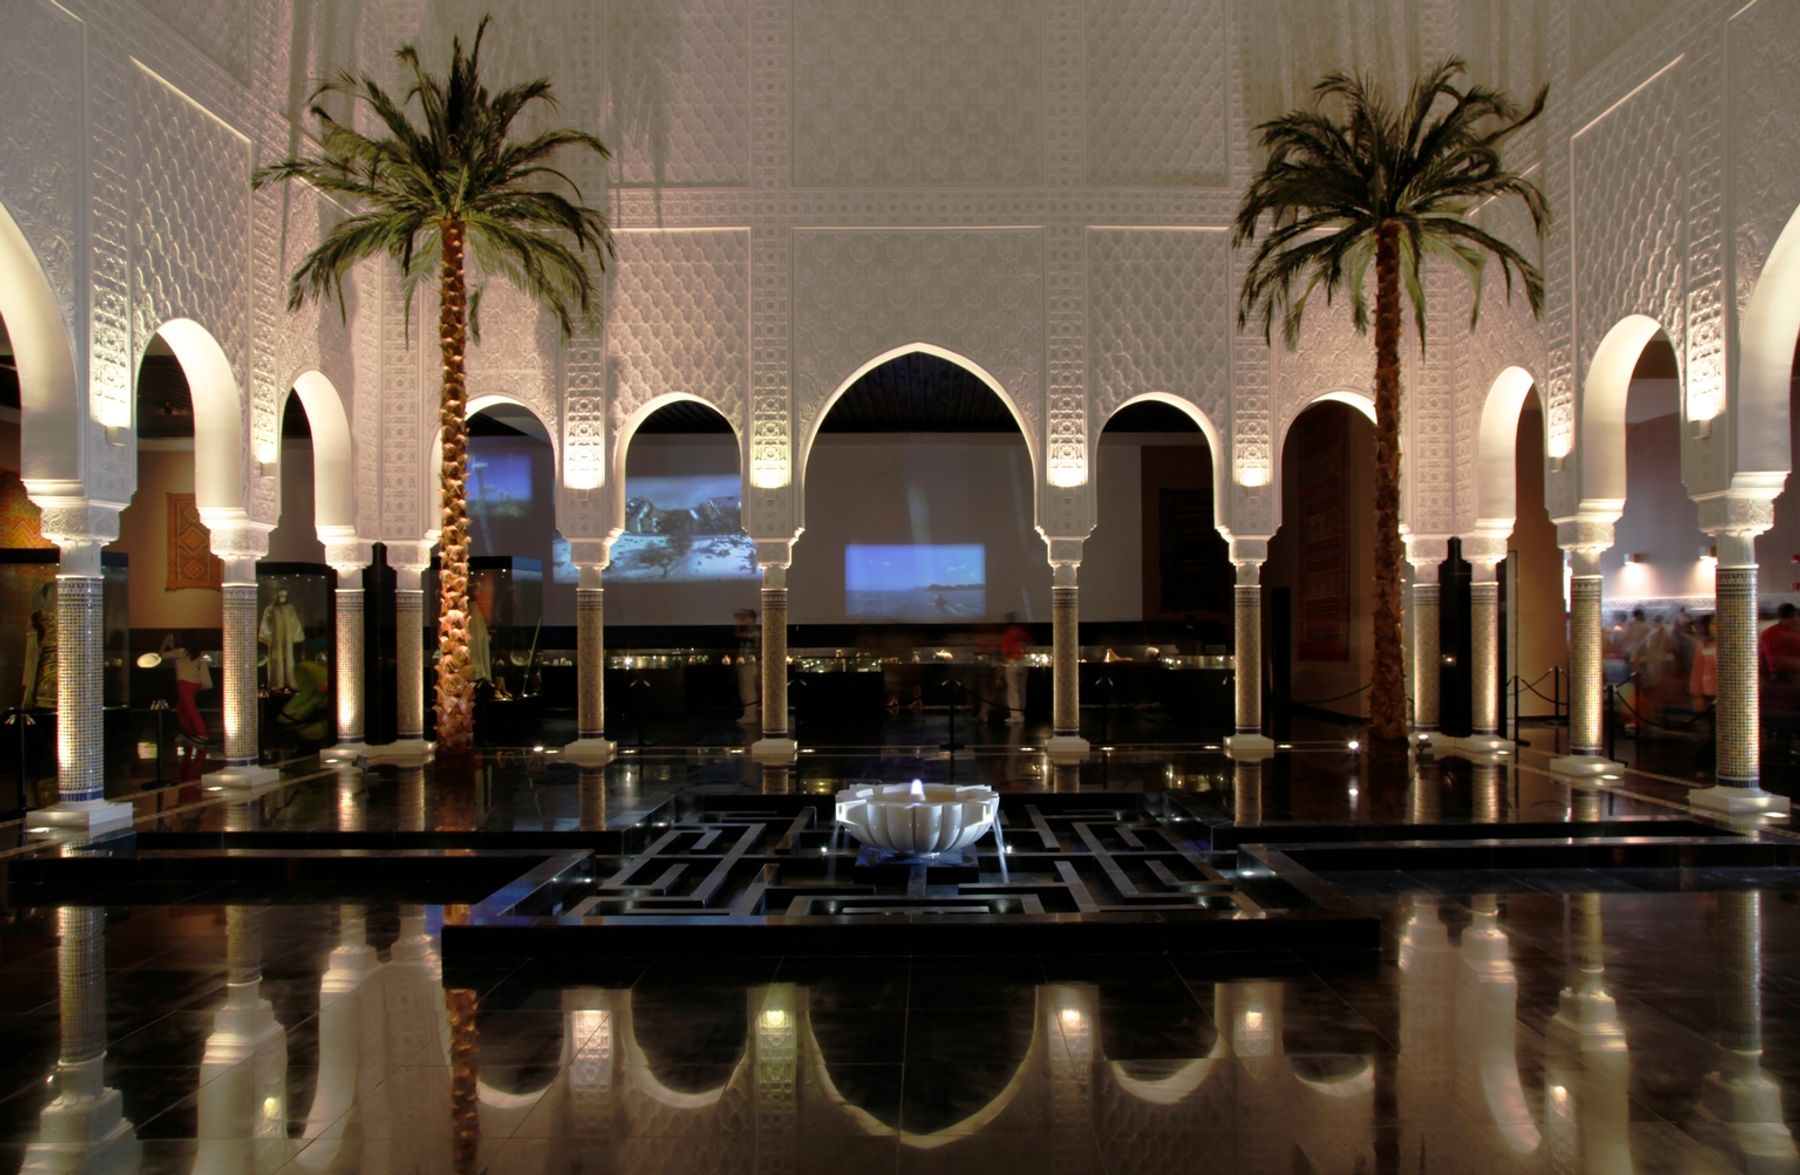 Shanghai EXPO - Padiglione del Marocco, Shanghai. Architetti: Mustapha Alaoui, Marocco.